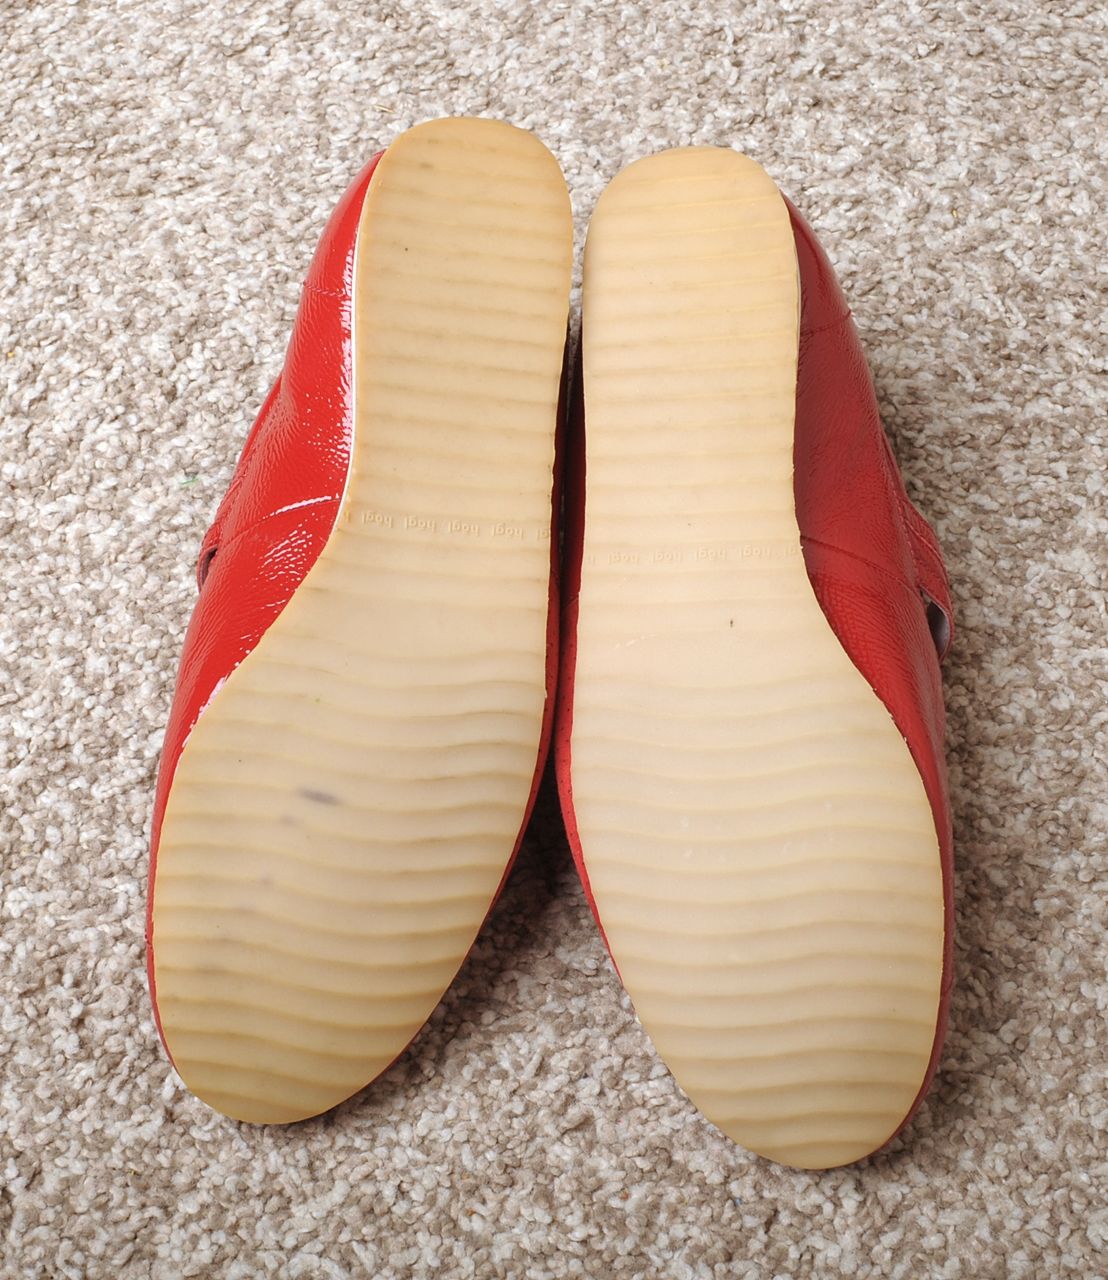 HOGL skóra czerwone sneakers uk 7 26 cm